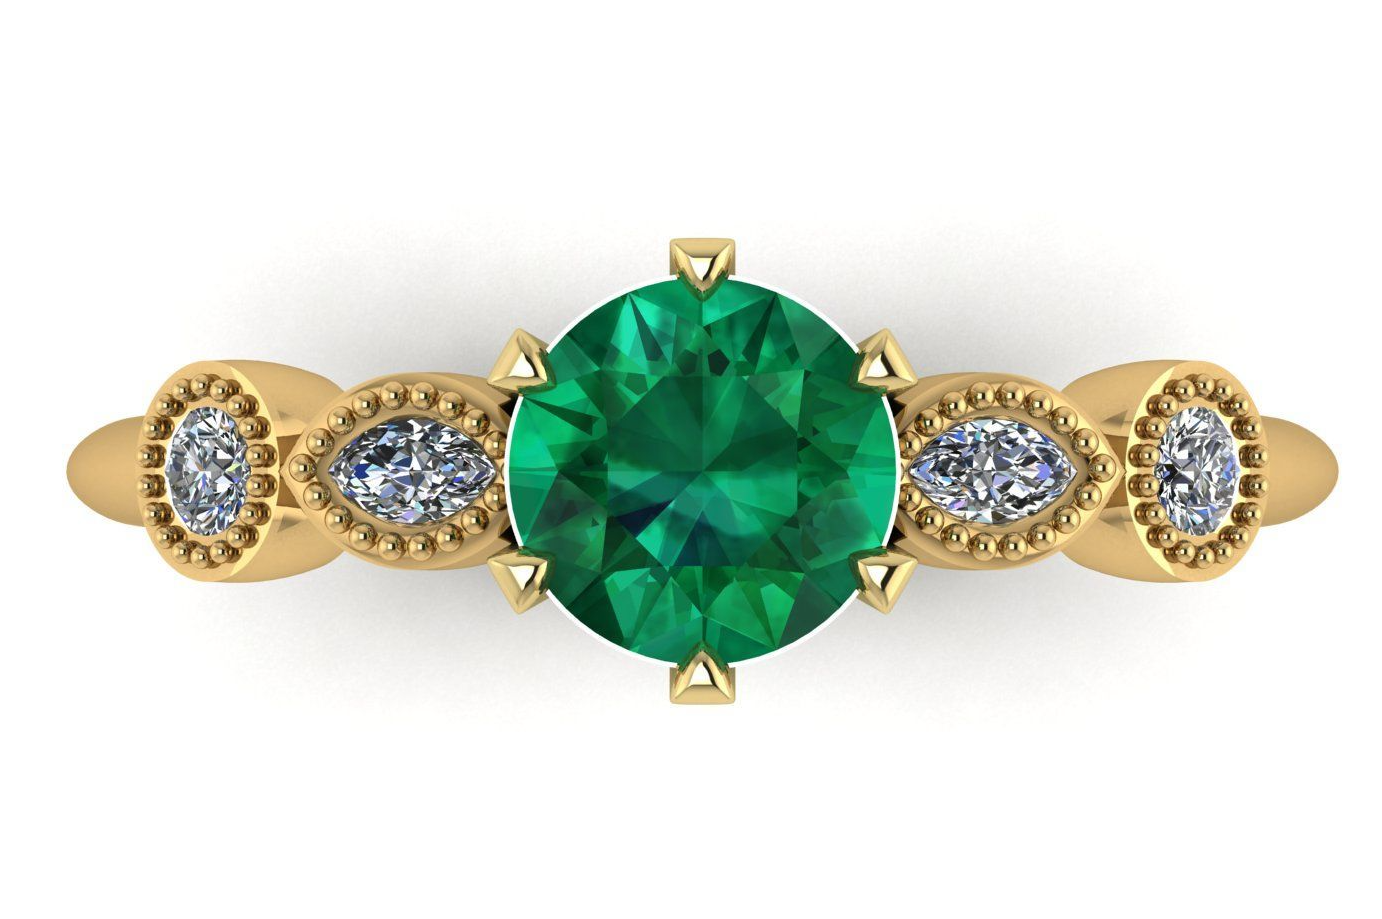 The Milena five gemstone ring